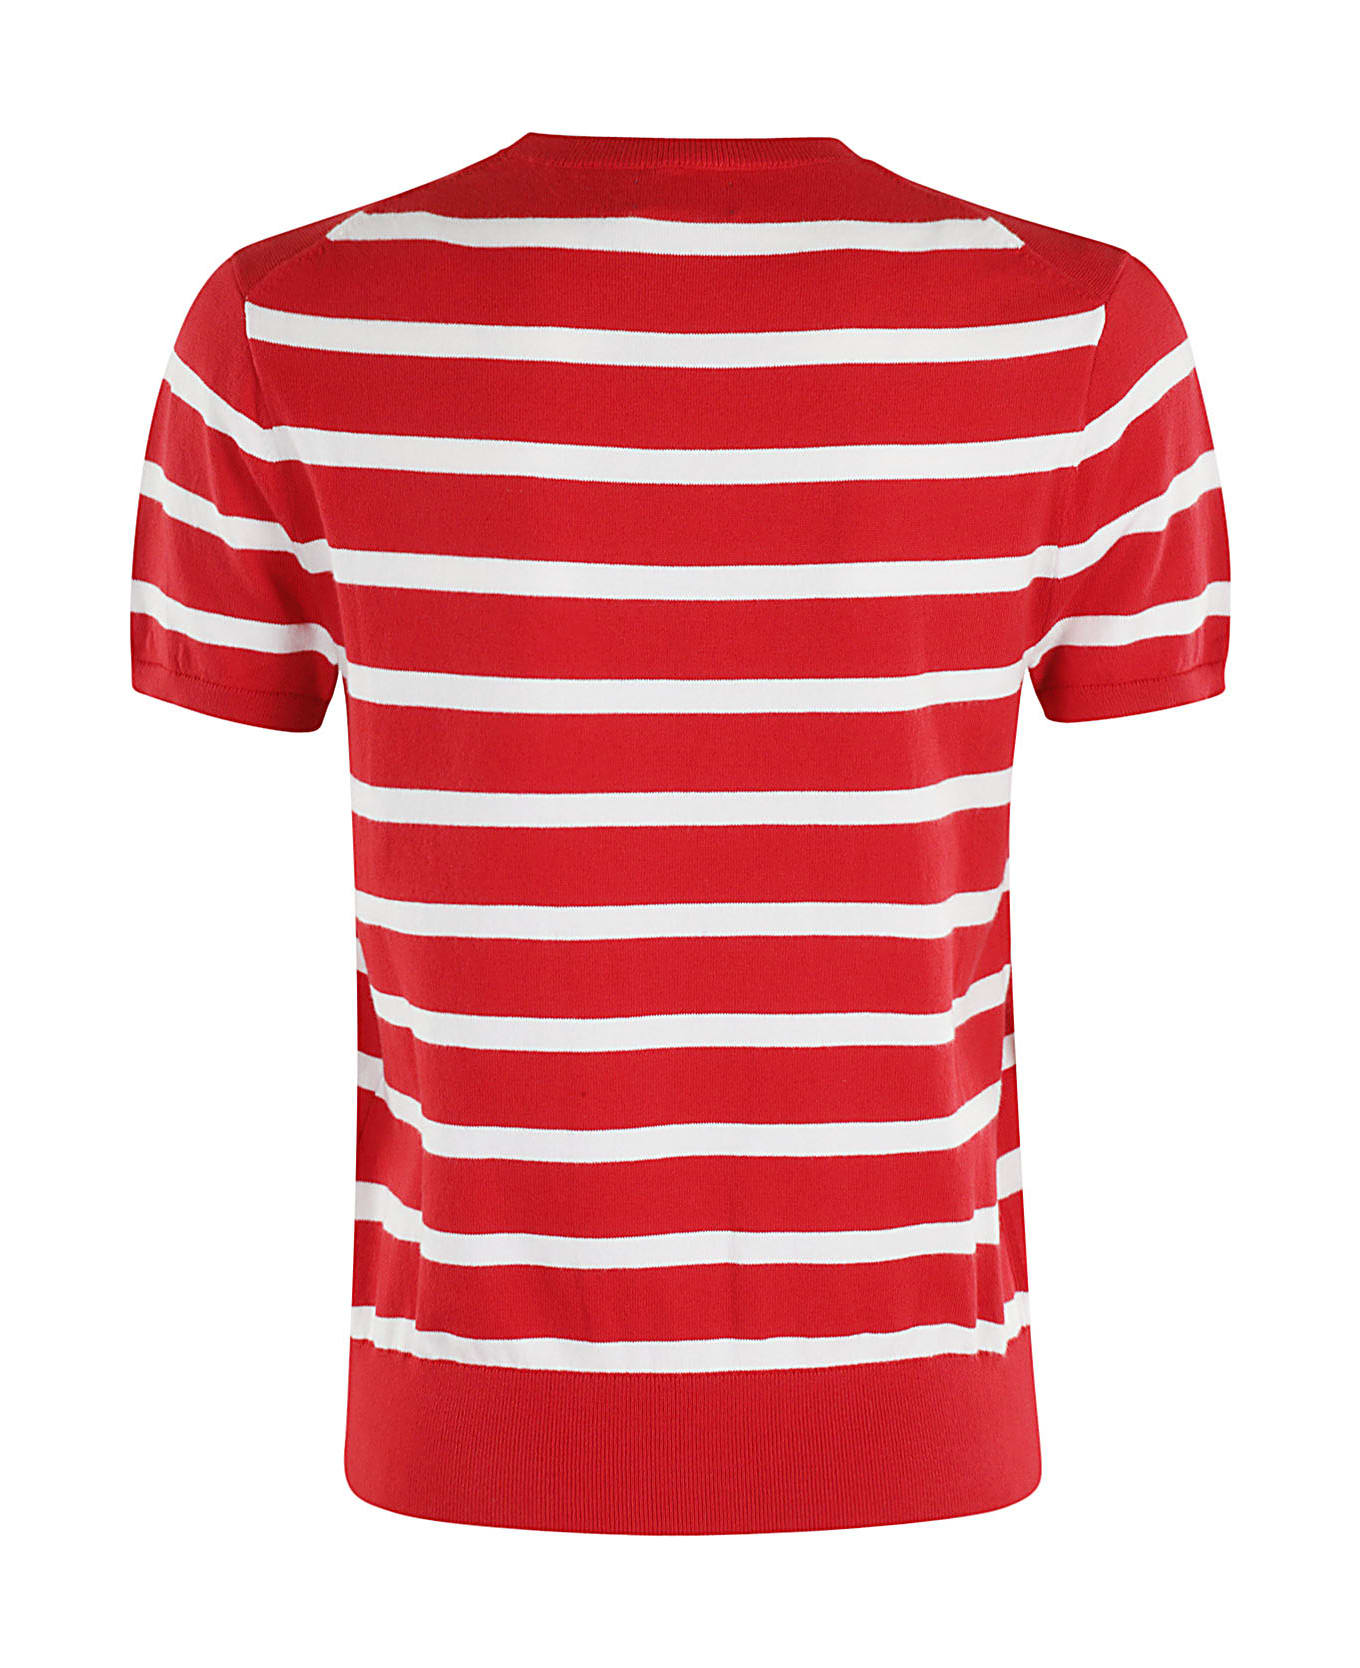 Polo Ralph Lauren Stripes - Red White Tシャツ